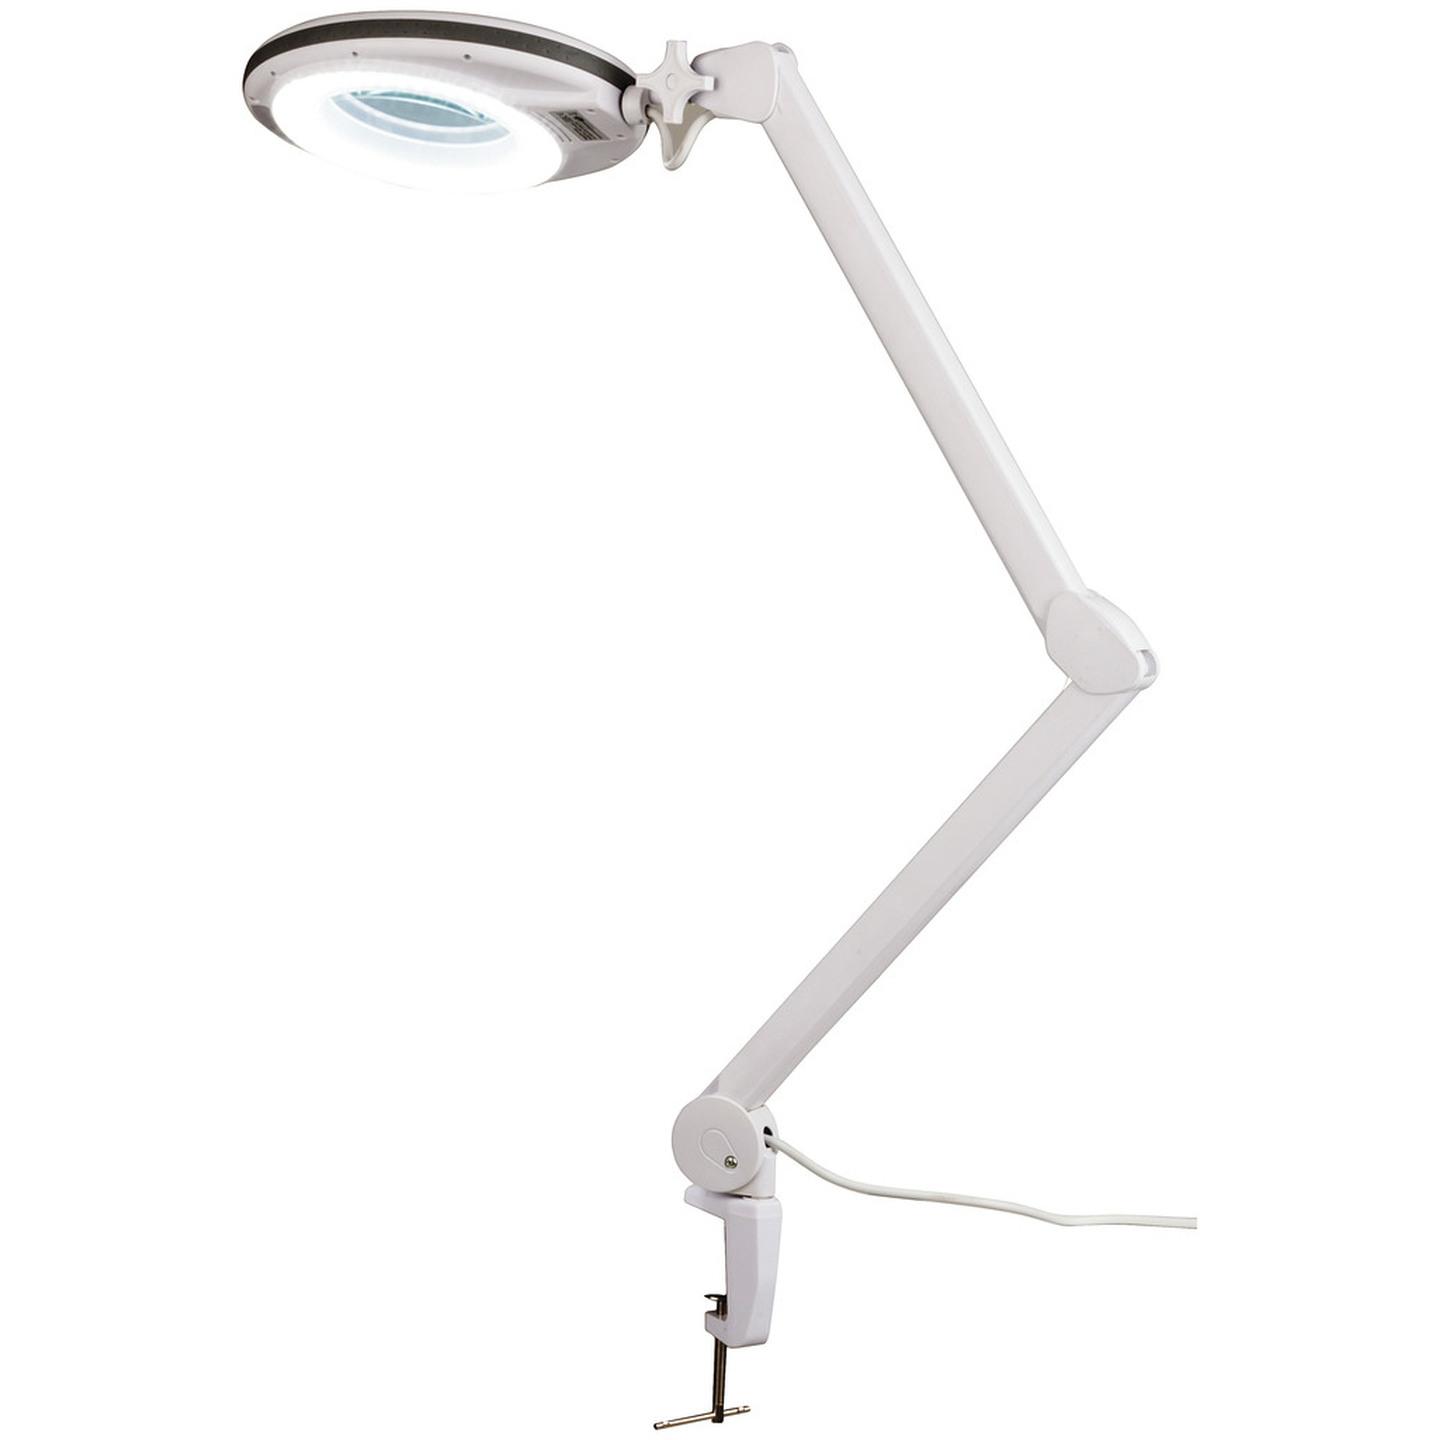 5 Diopter LED Illuminated Magnifying Lamp